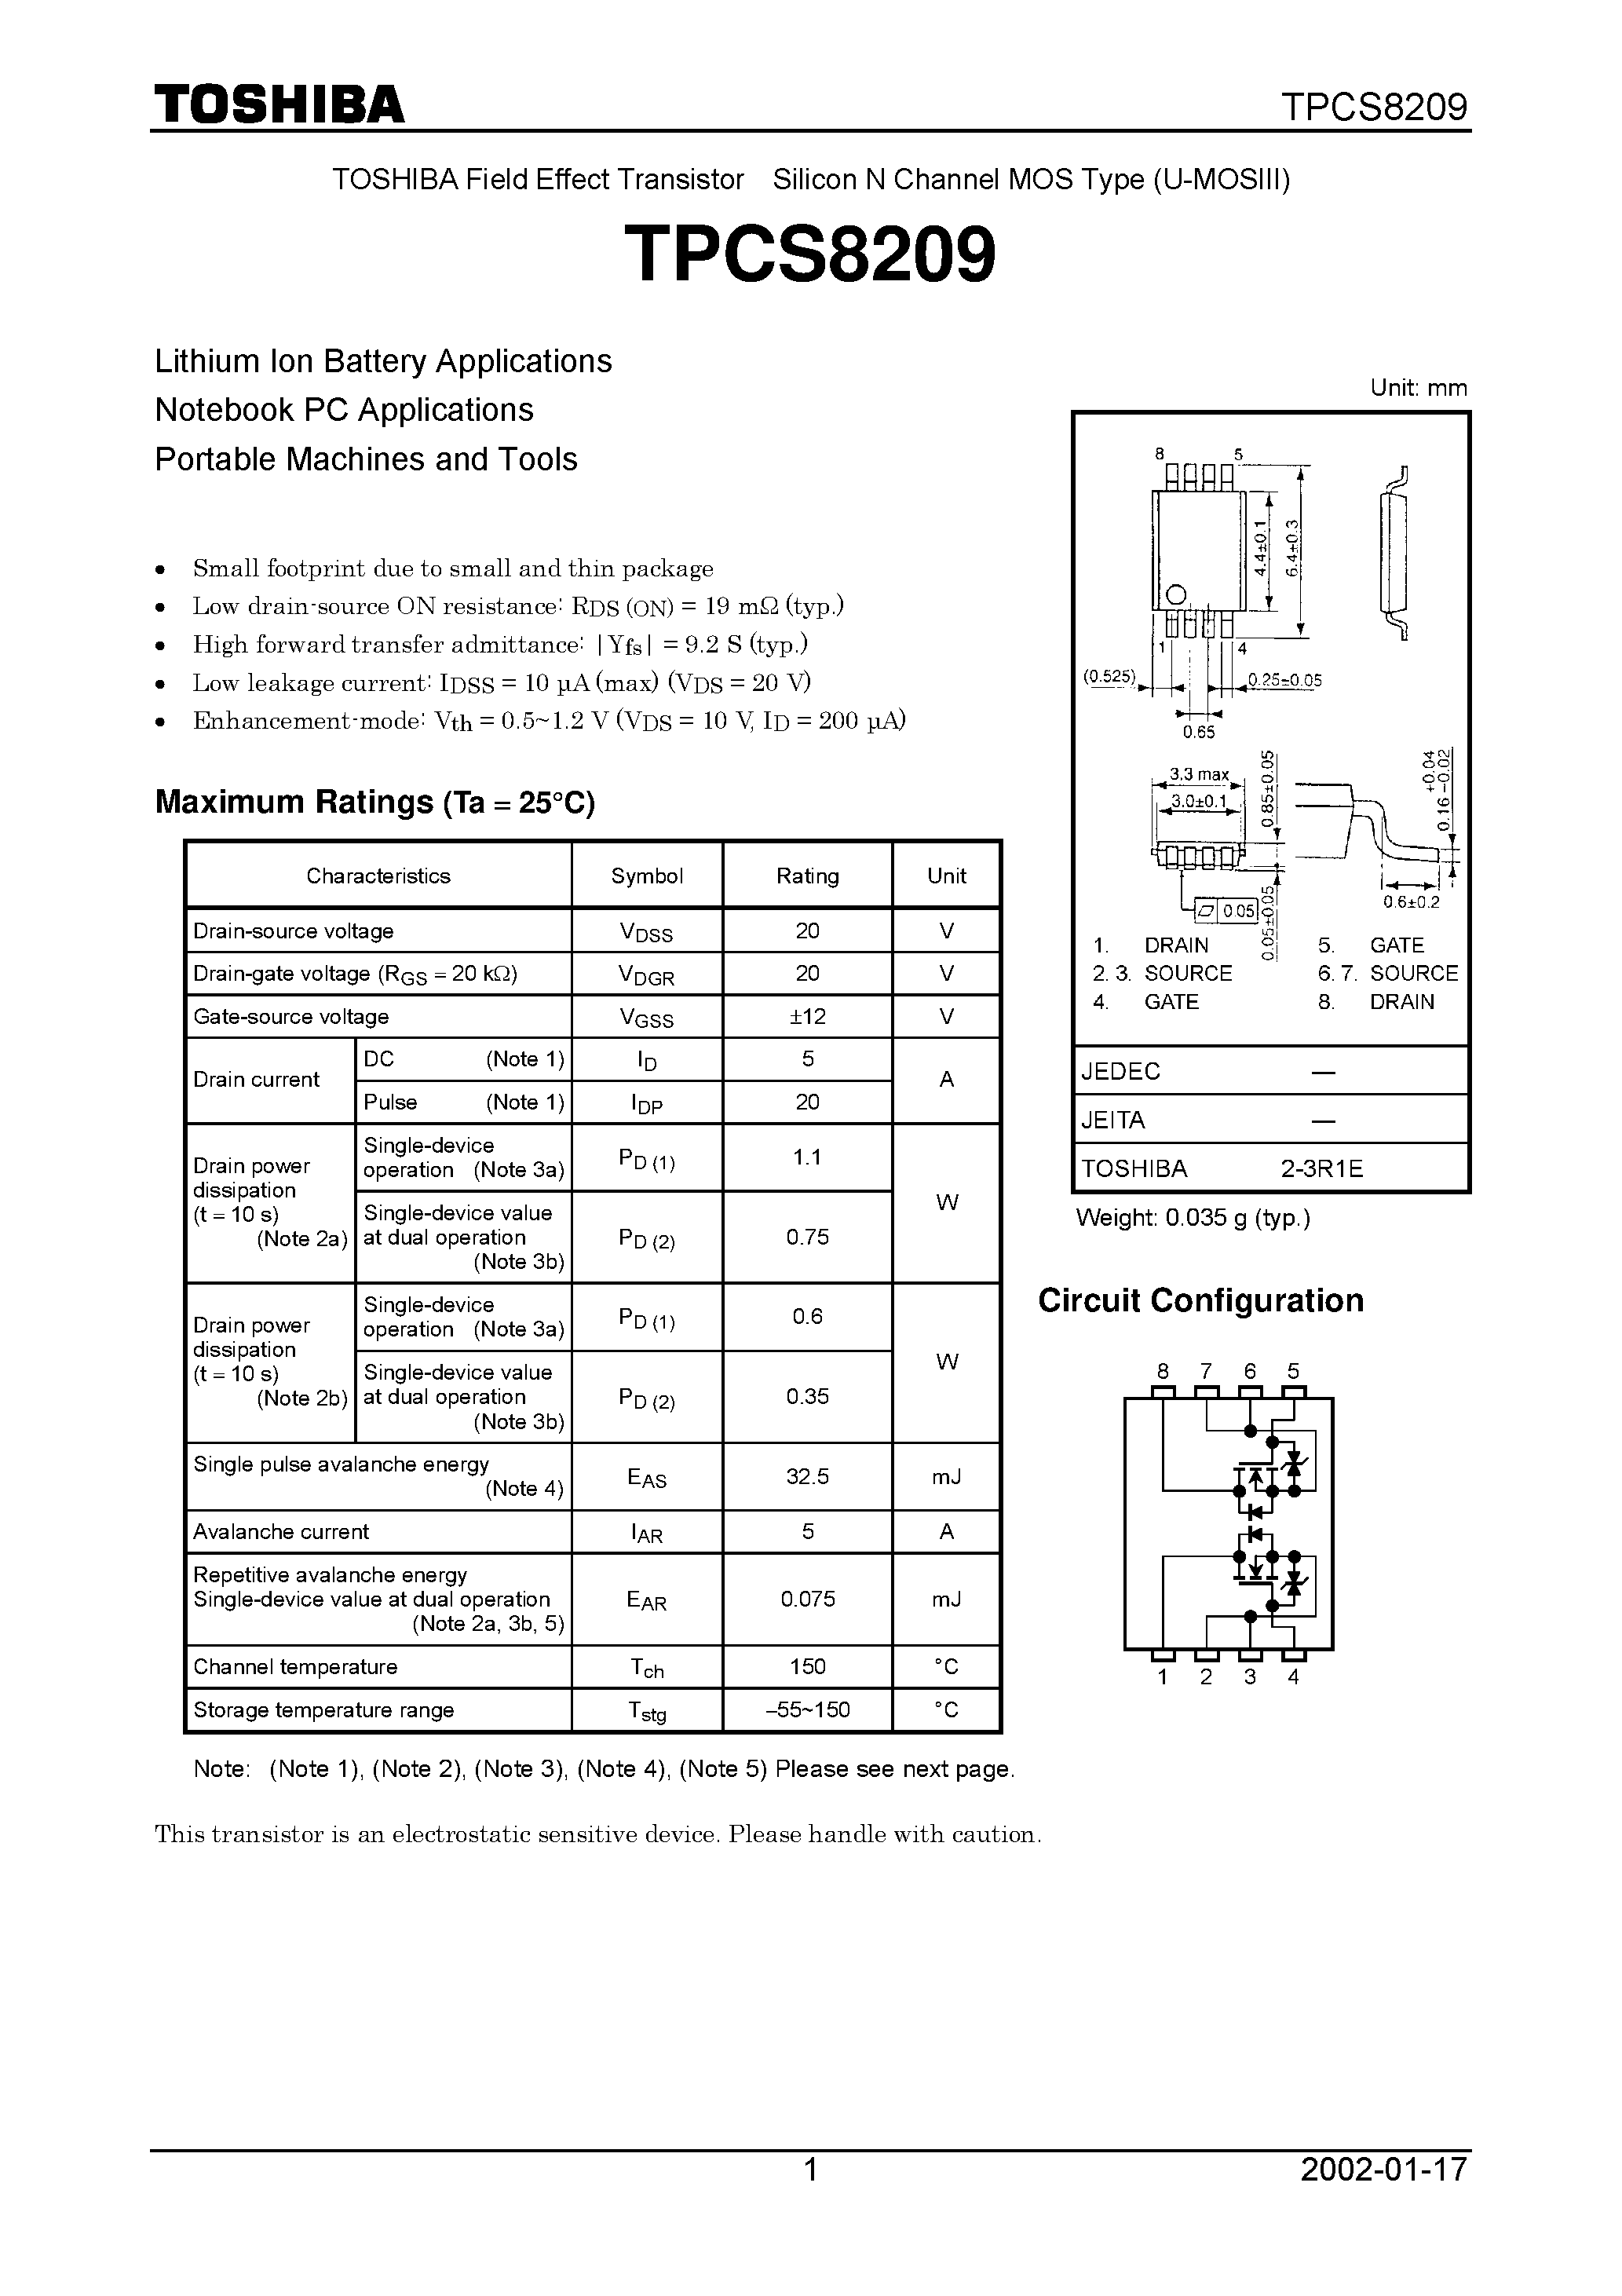 Datasheet TPCS8209 - TOSHIBA Field Effect Transistor Silicon N Channel MOS Type (U-MOSIII) page 1